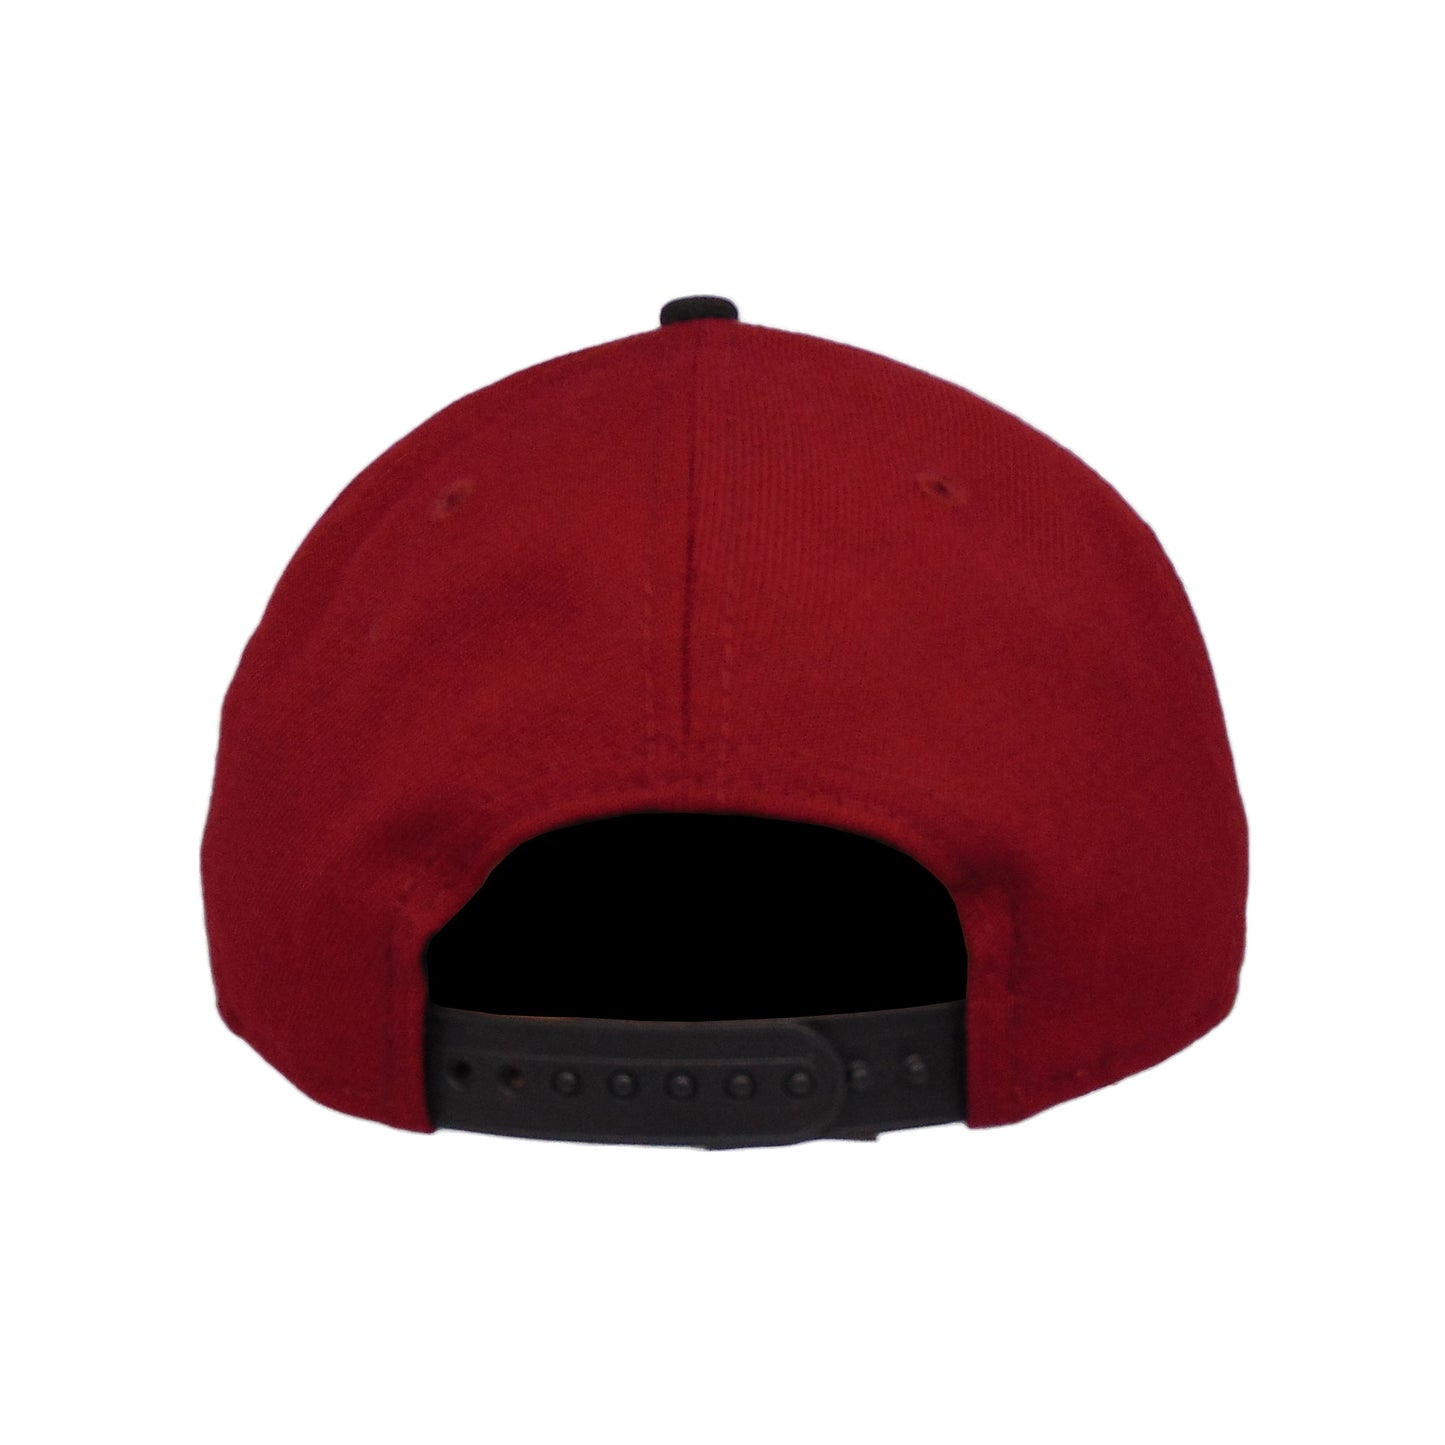 San Francisco Custom New Era 9FIFTY Snapback Cap Cardinal Red